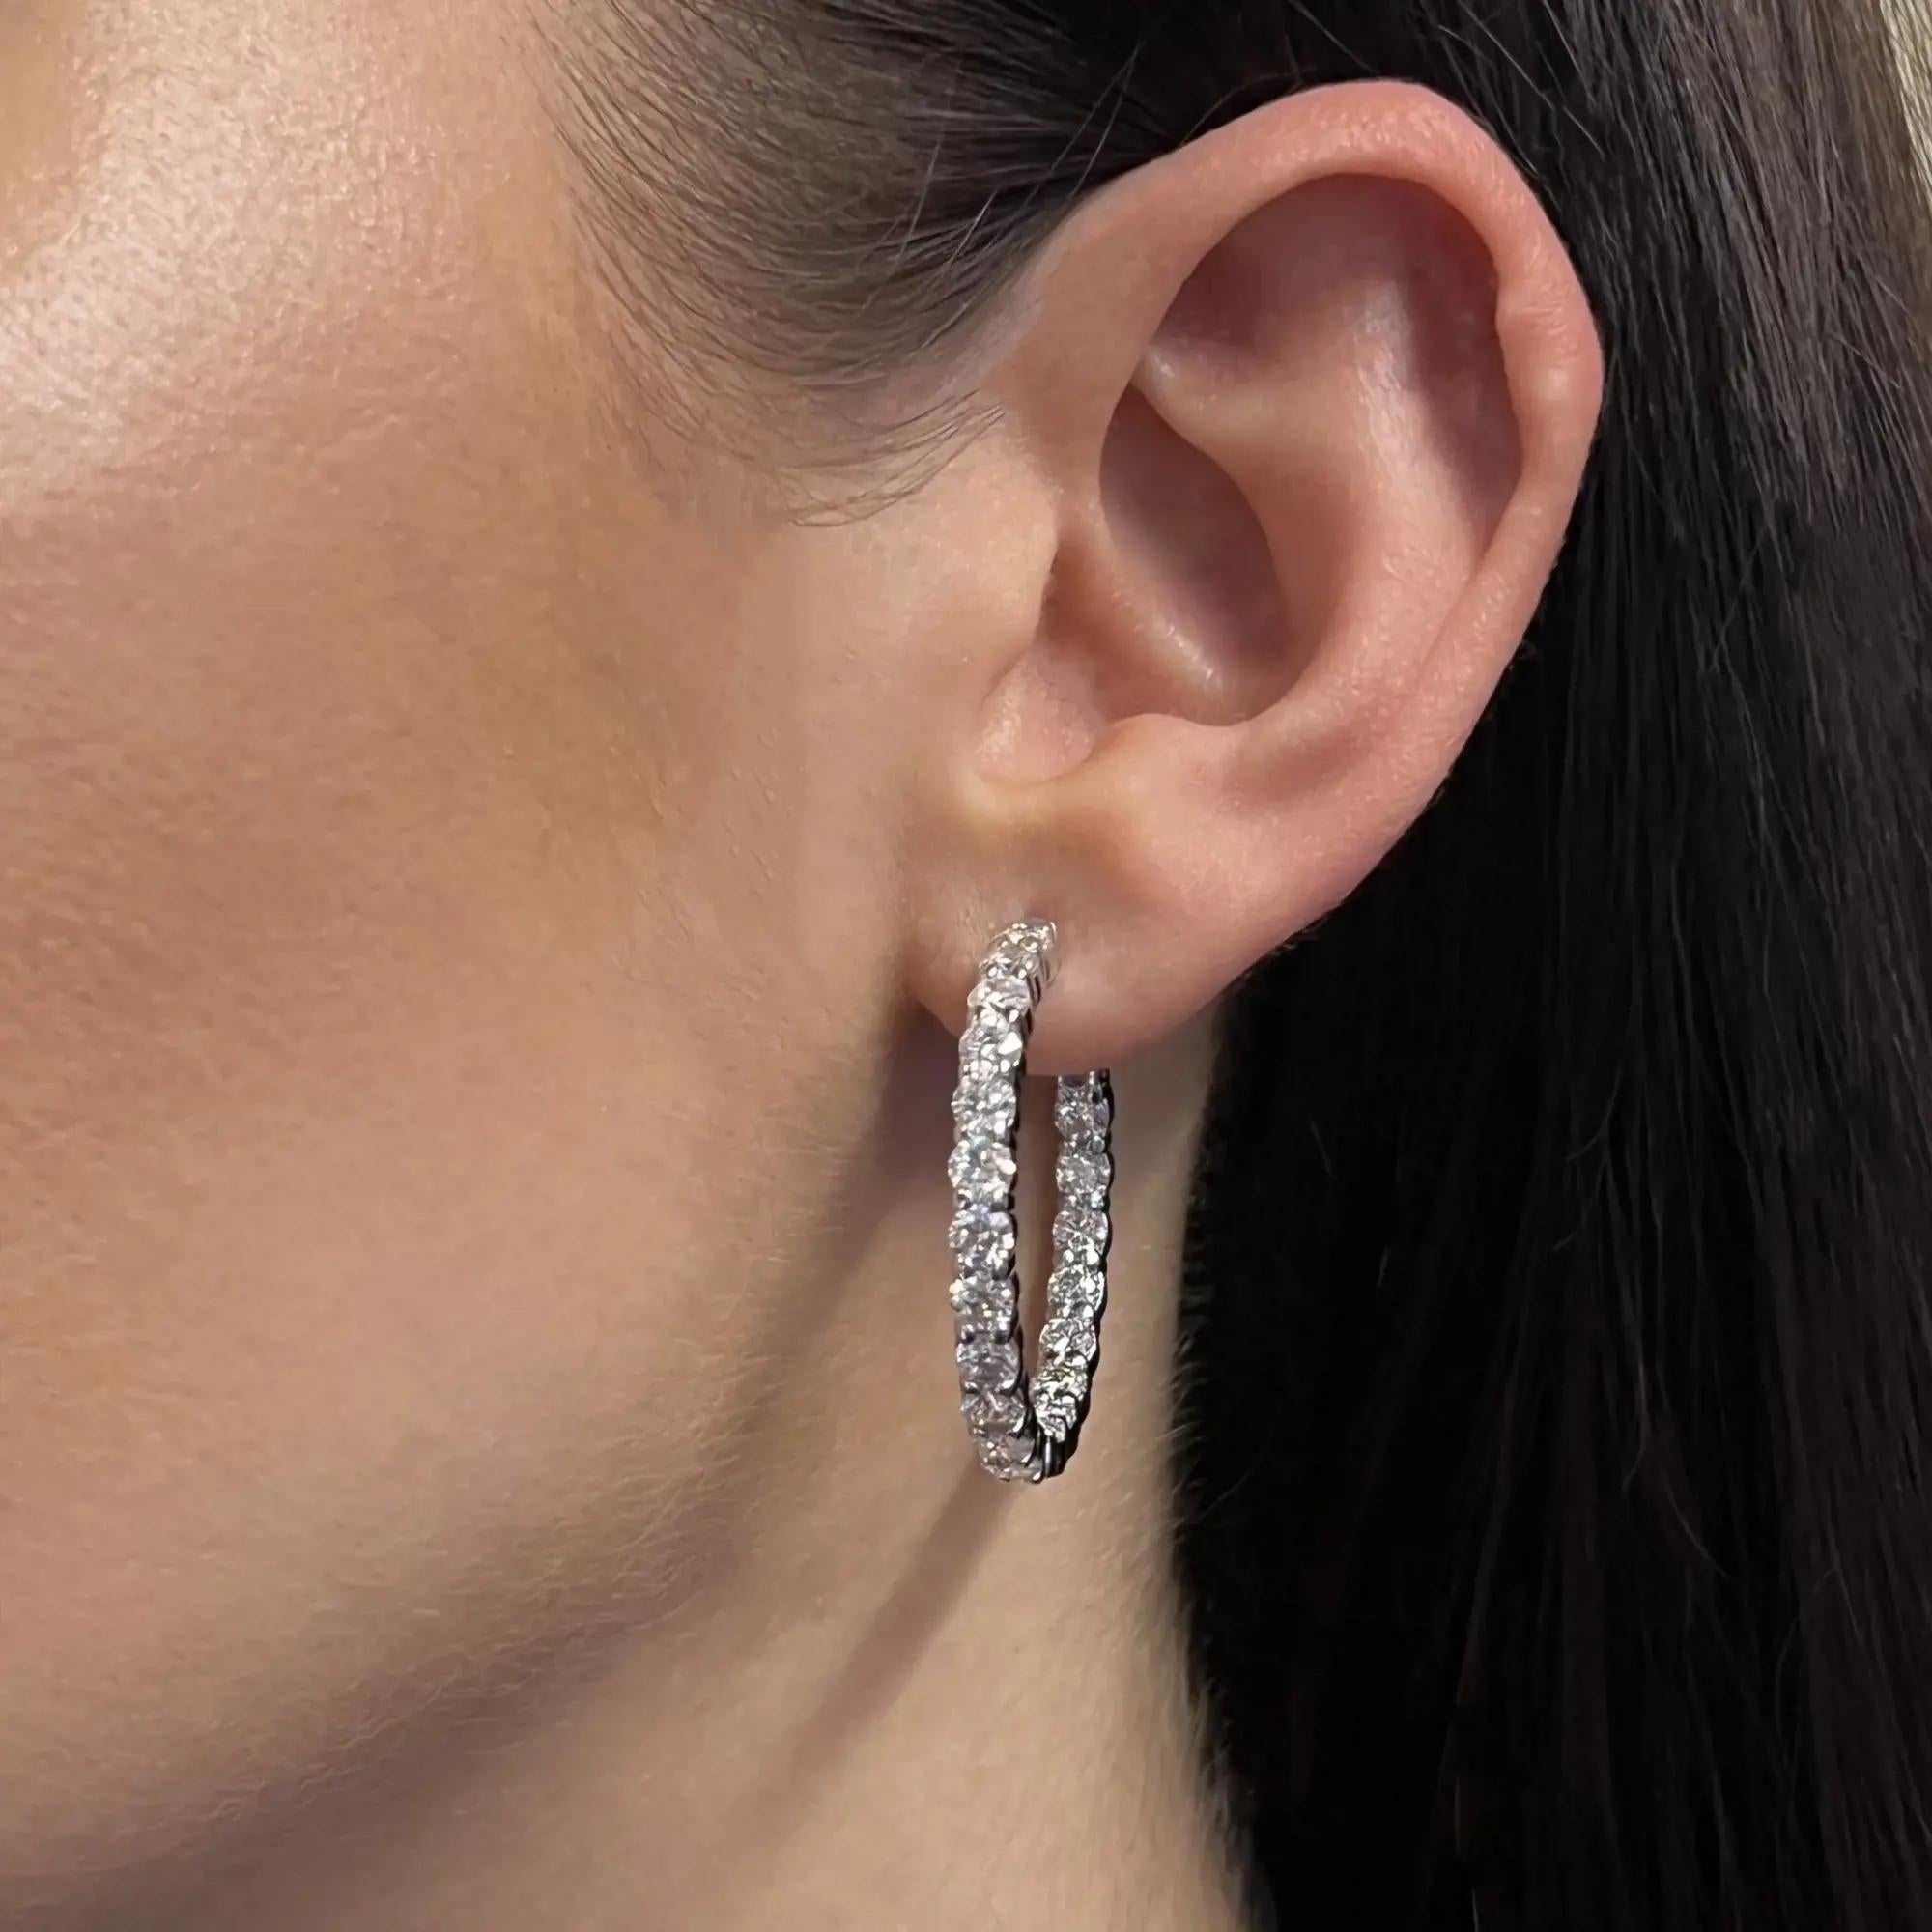 Rachel Koen Inside Out Diamond Hoop Earrings 14K White Gold 4.91Cttw In New Condition For Sale In New York, NY